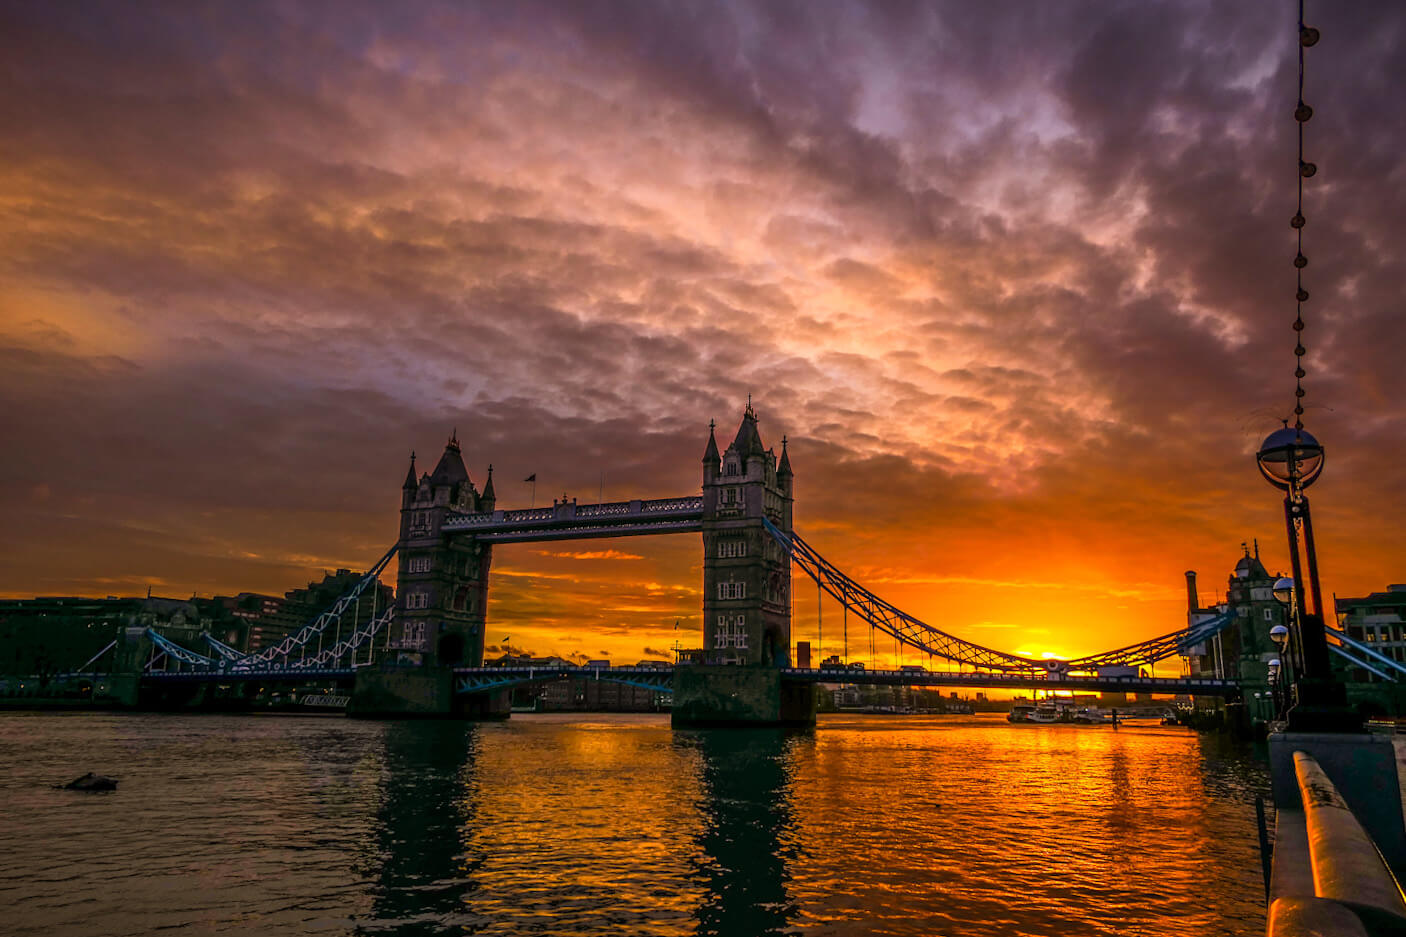 Tower-Bridge-at-Dawn-by-Jemma-Southall-@mariannejemma-1